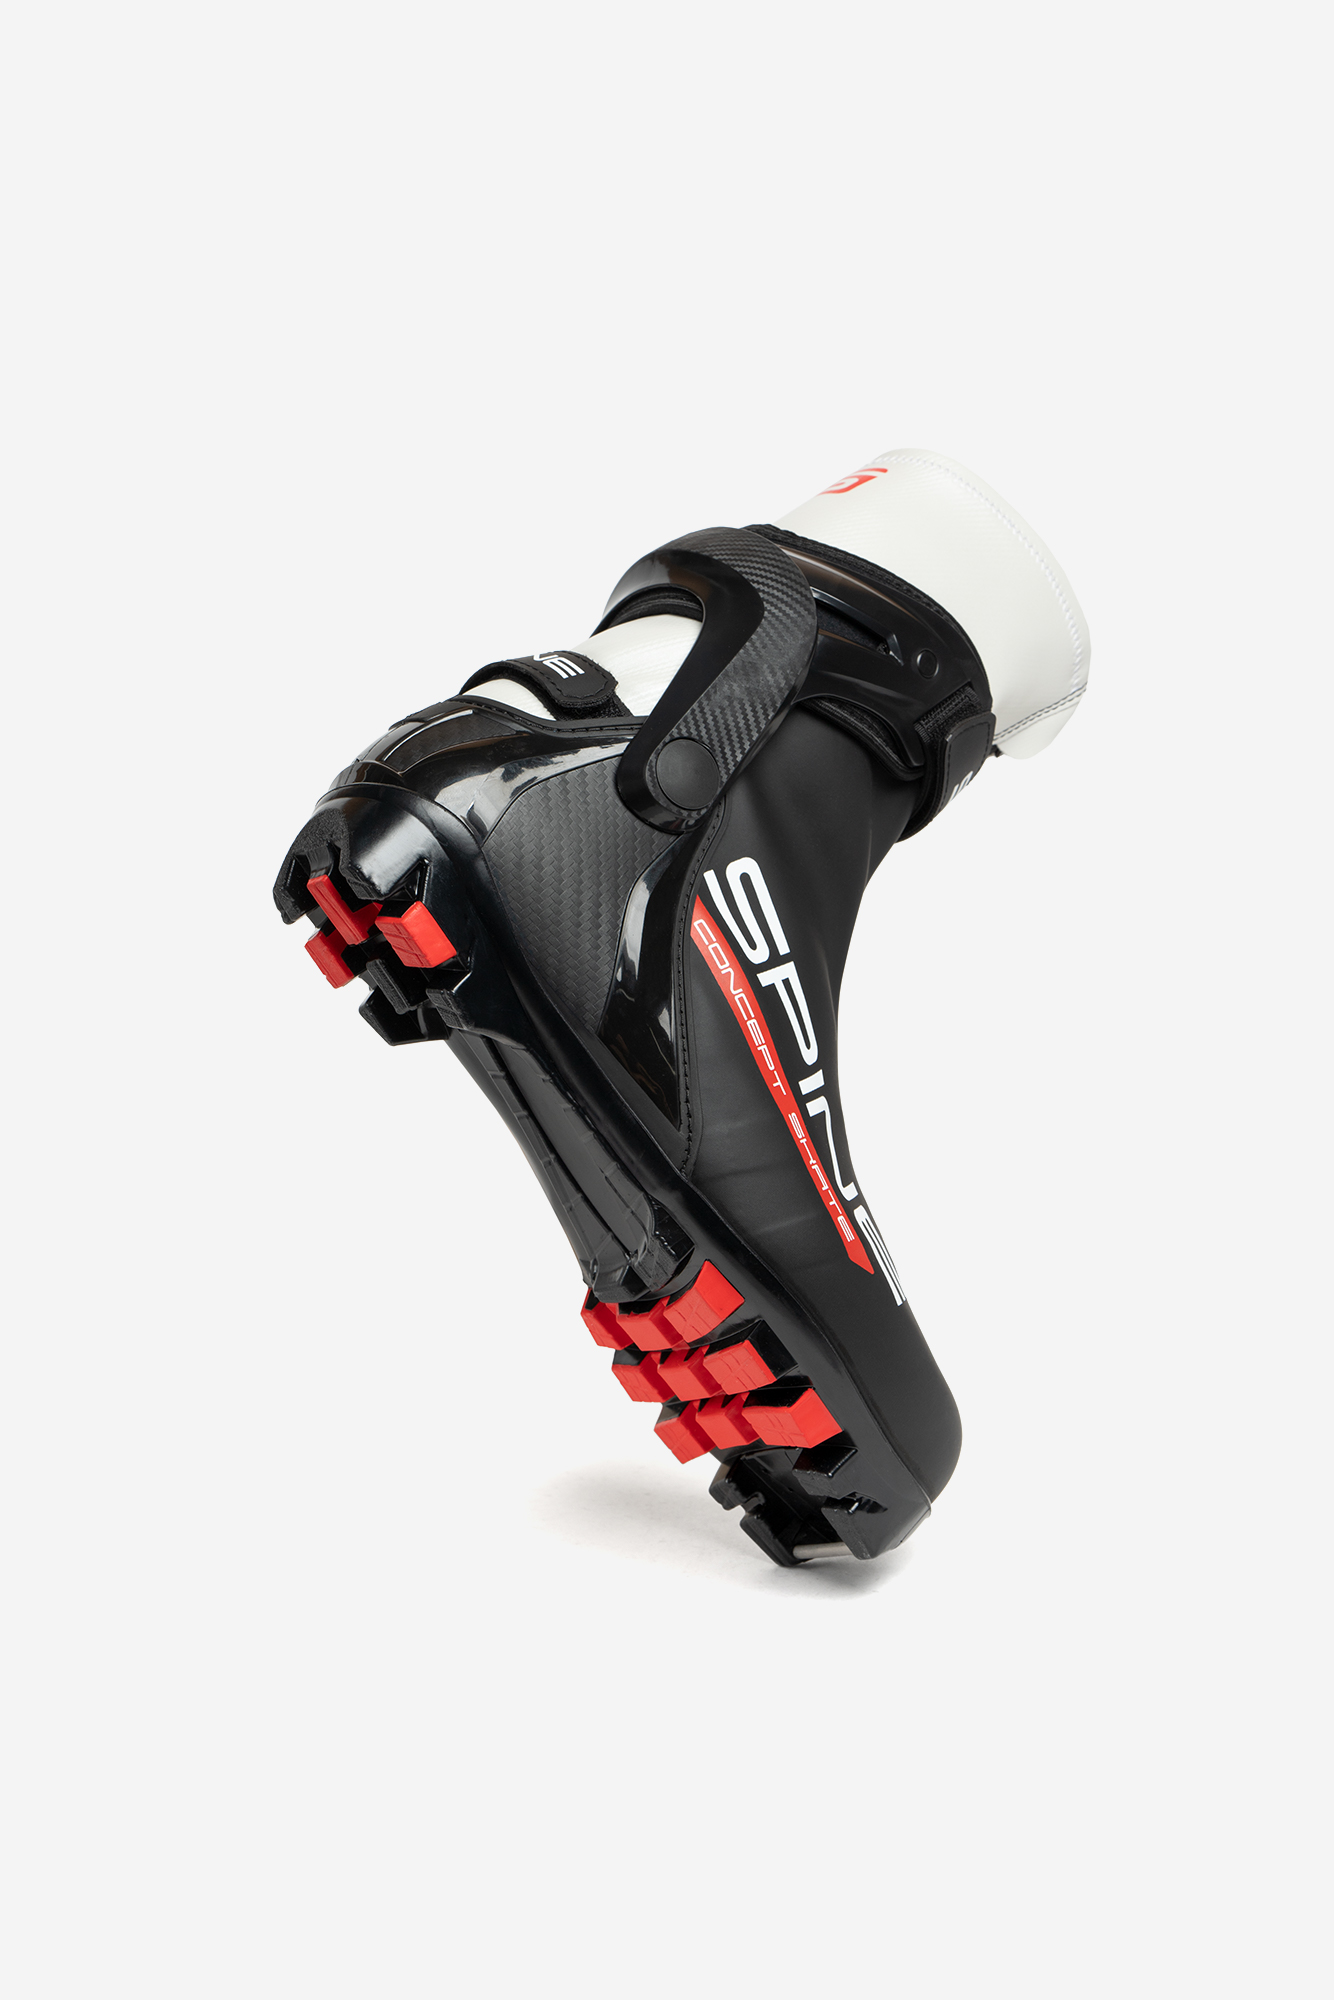 Ботинки лыжные Spine Concept Skate 296 NNN - Магазин 4SPORT